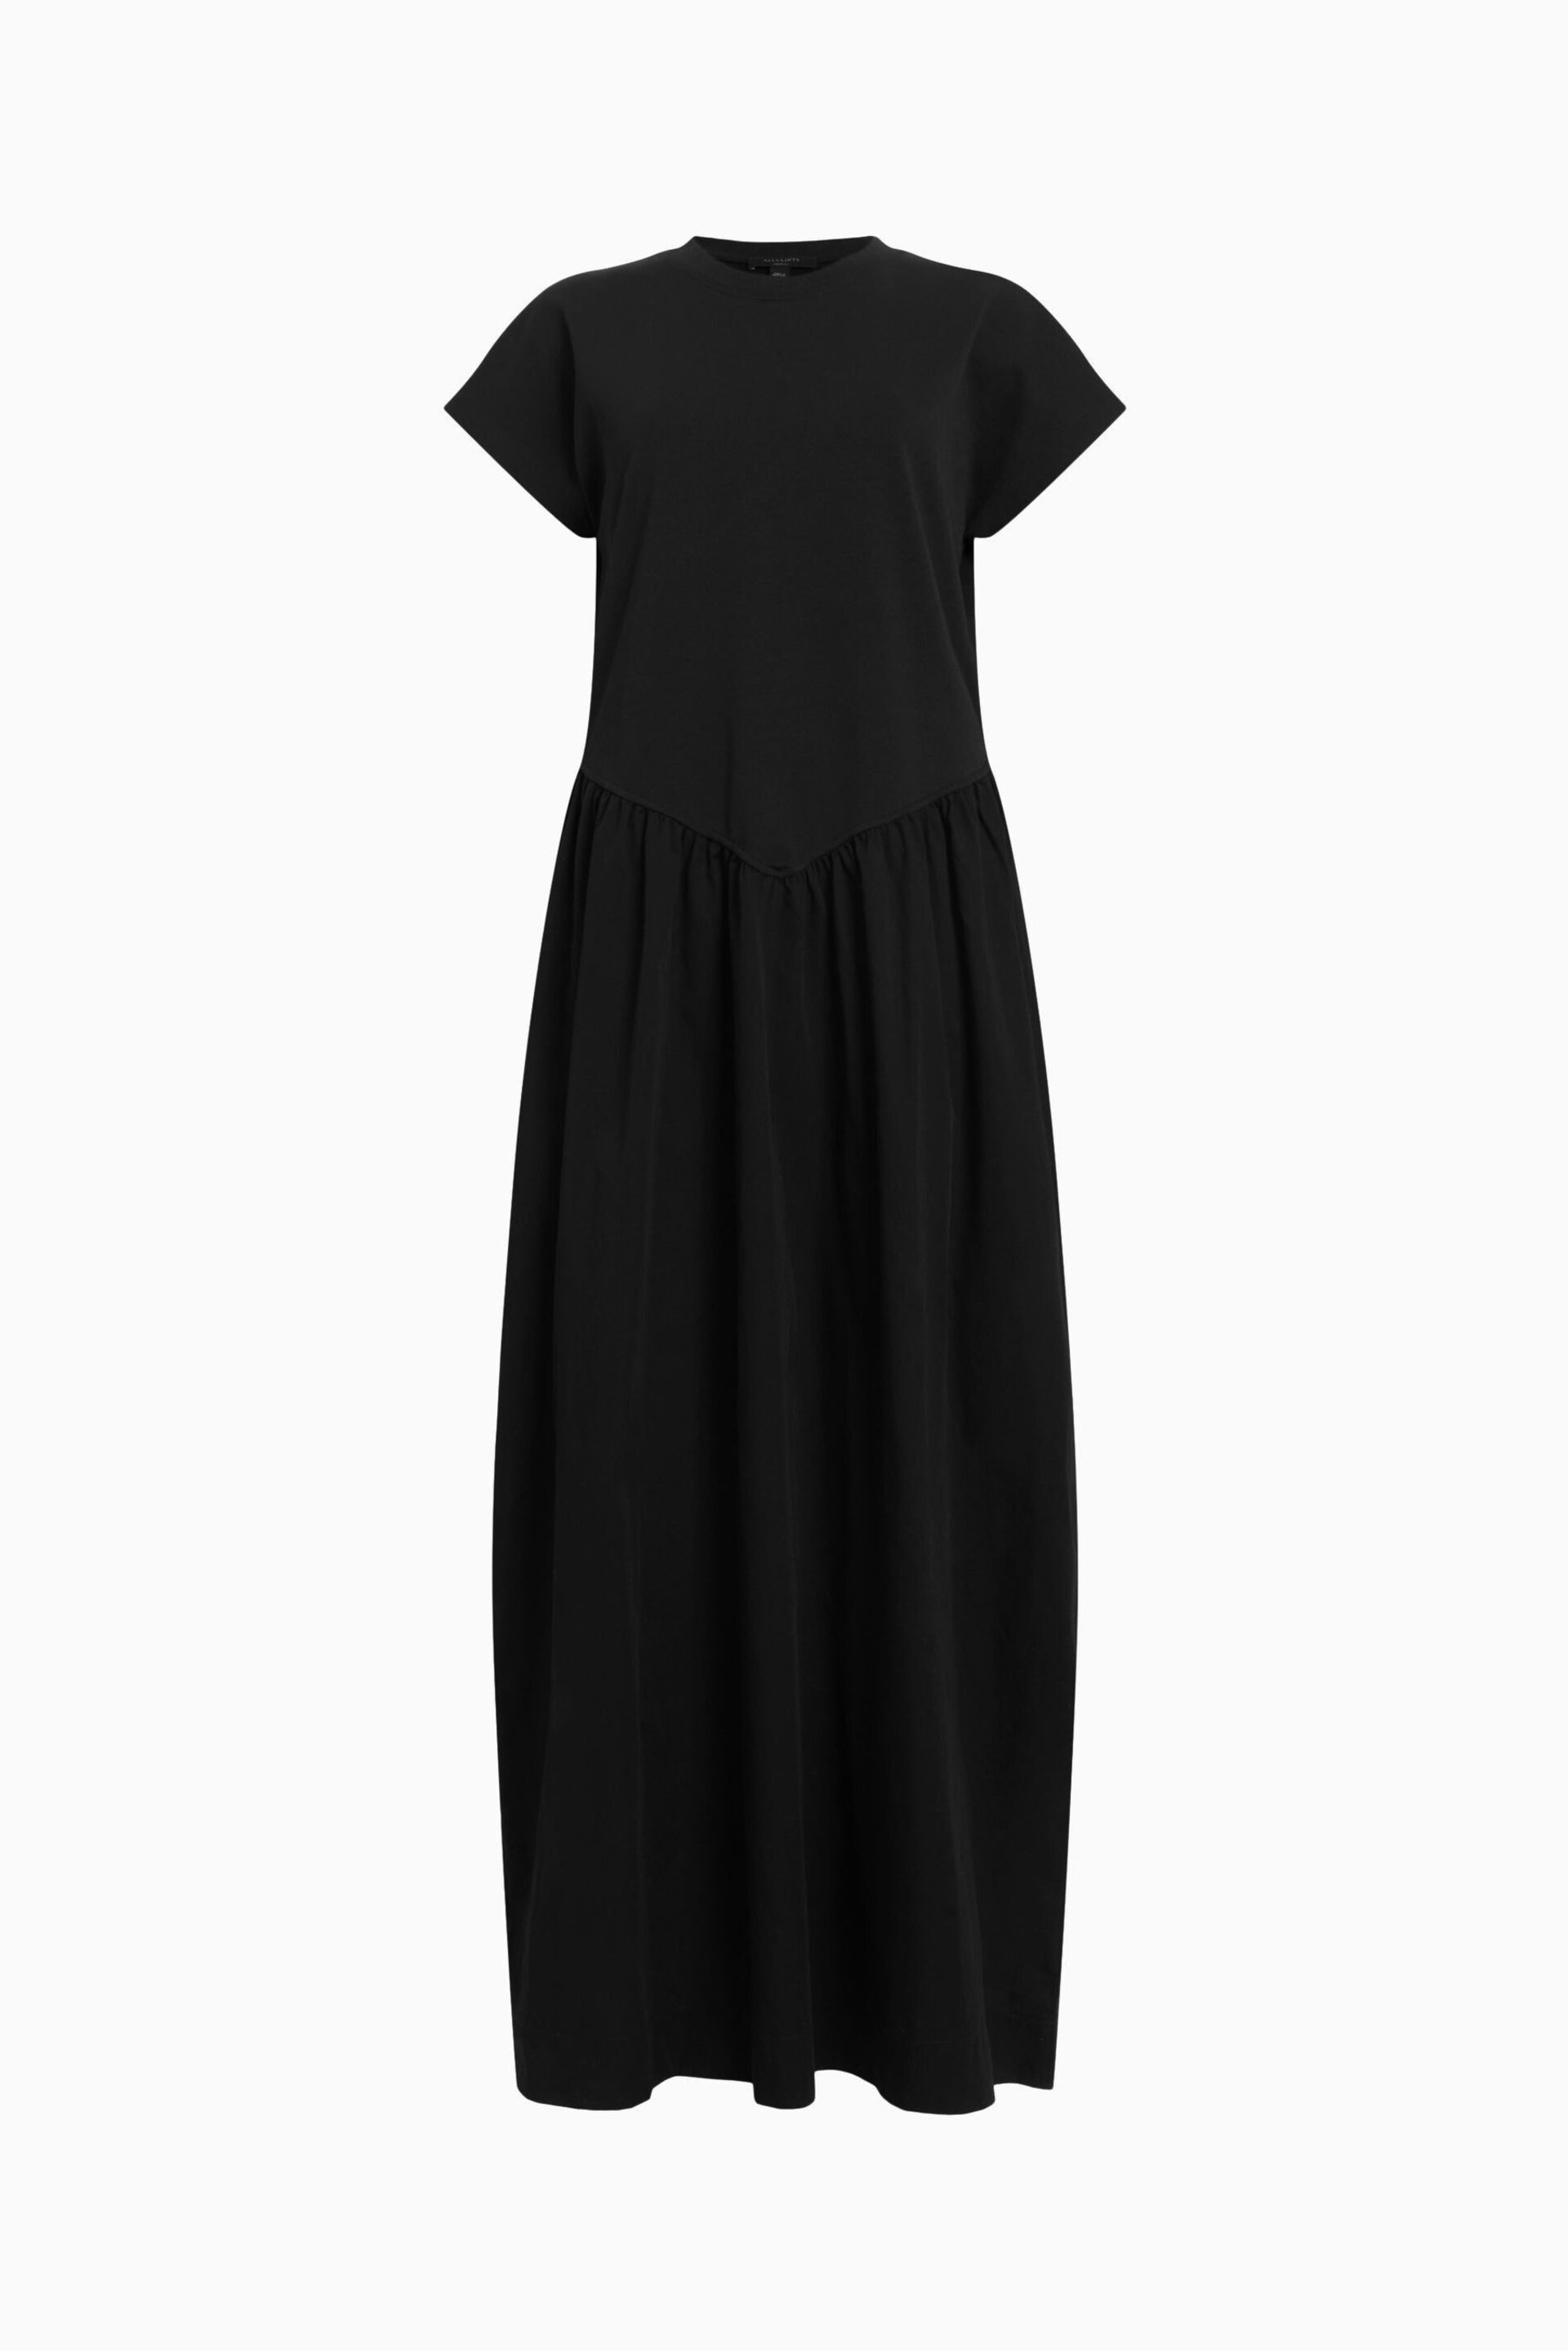 AllSaints Black Frankie Dress - Image 6 of 6